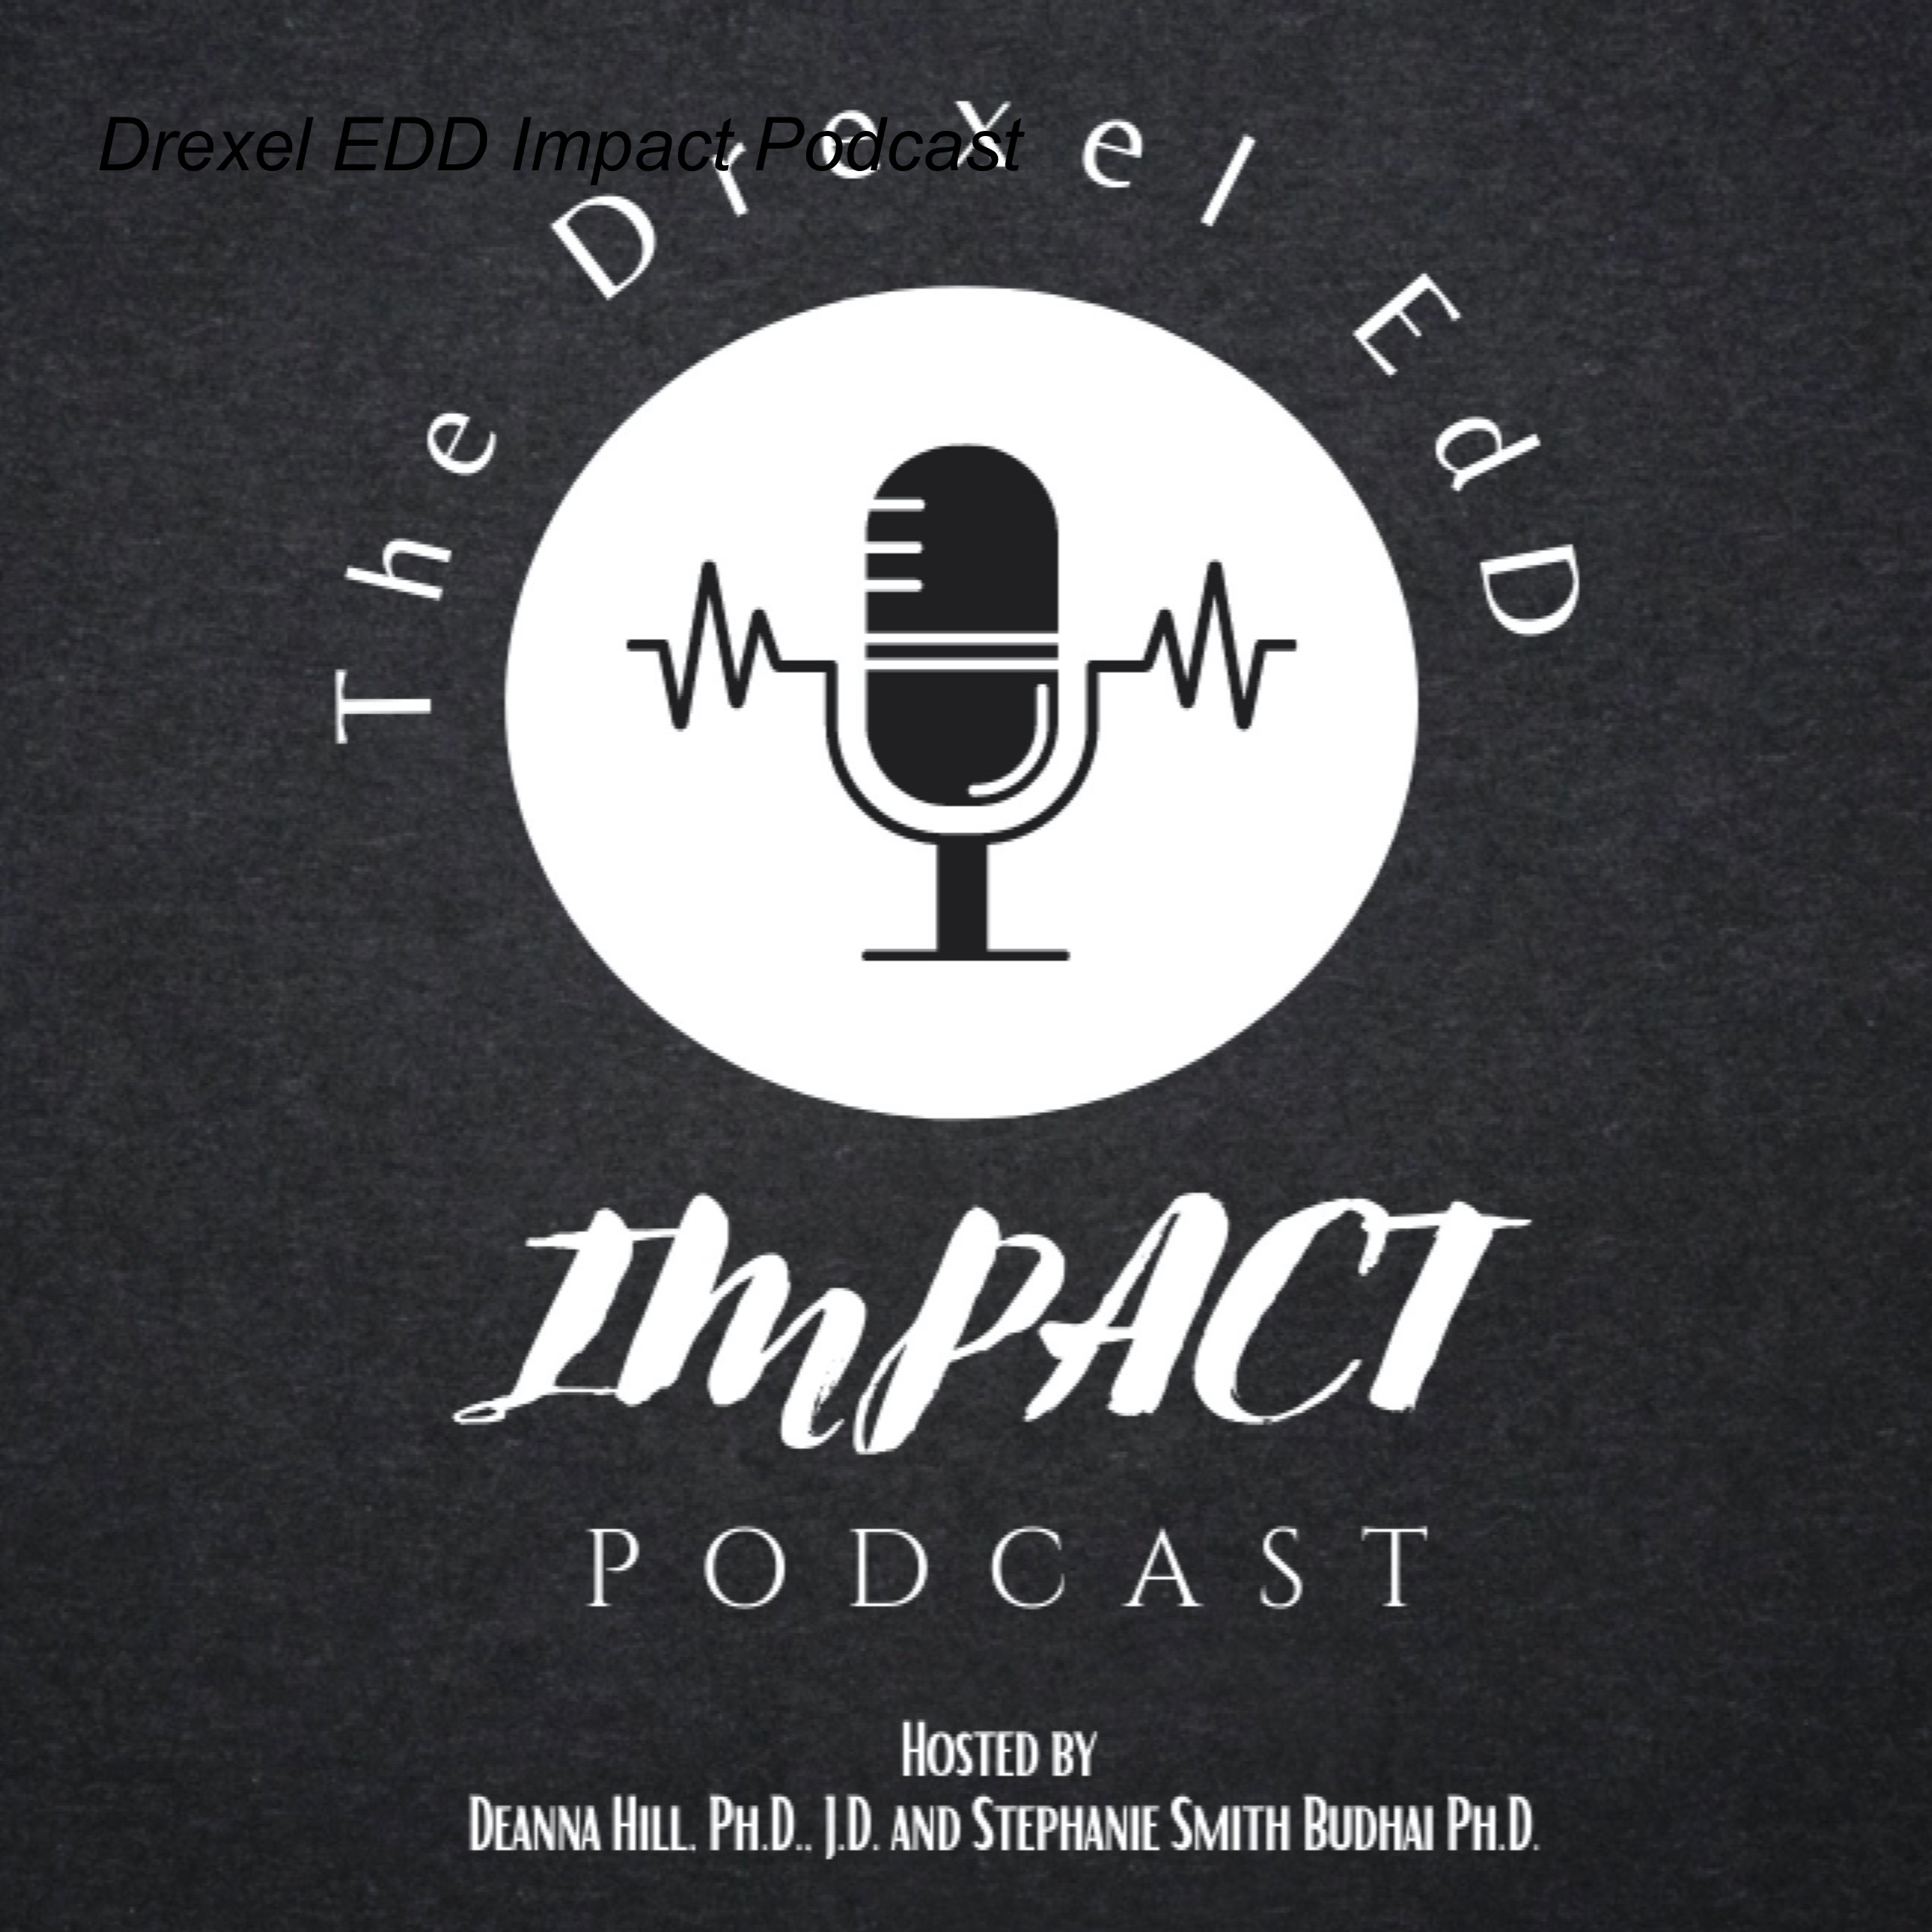 Drexel EDD Impact Podcast